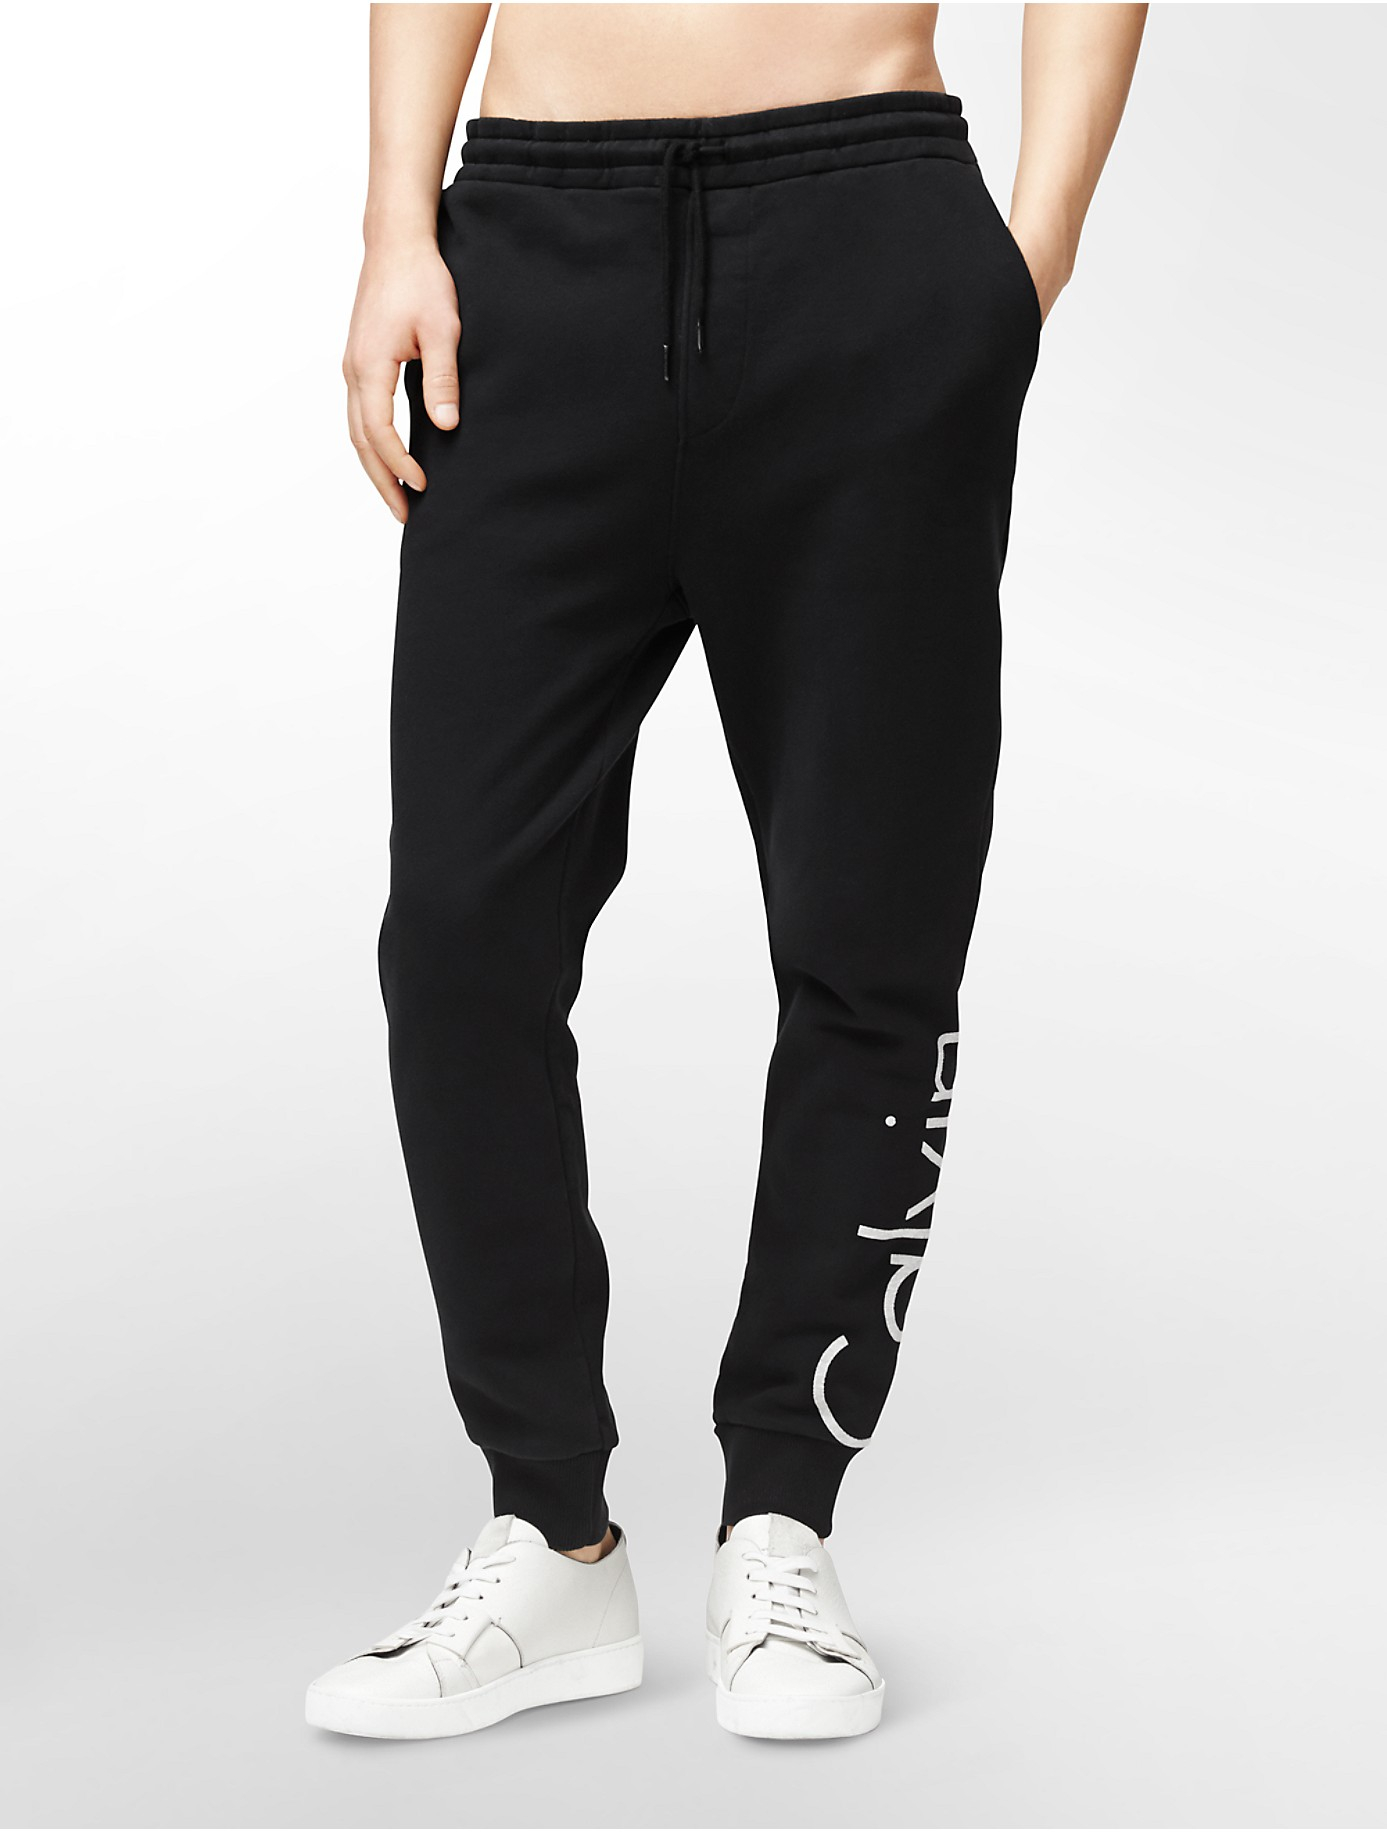 Calvin Klein Jeans Logo Jogger Sweatpants in Black for Men - Lyst